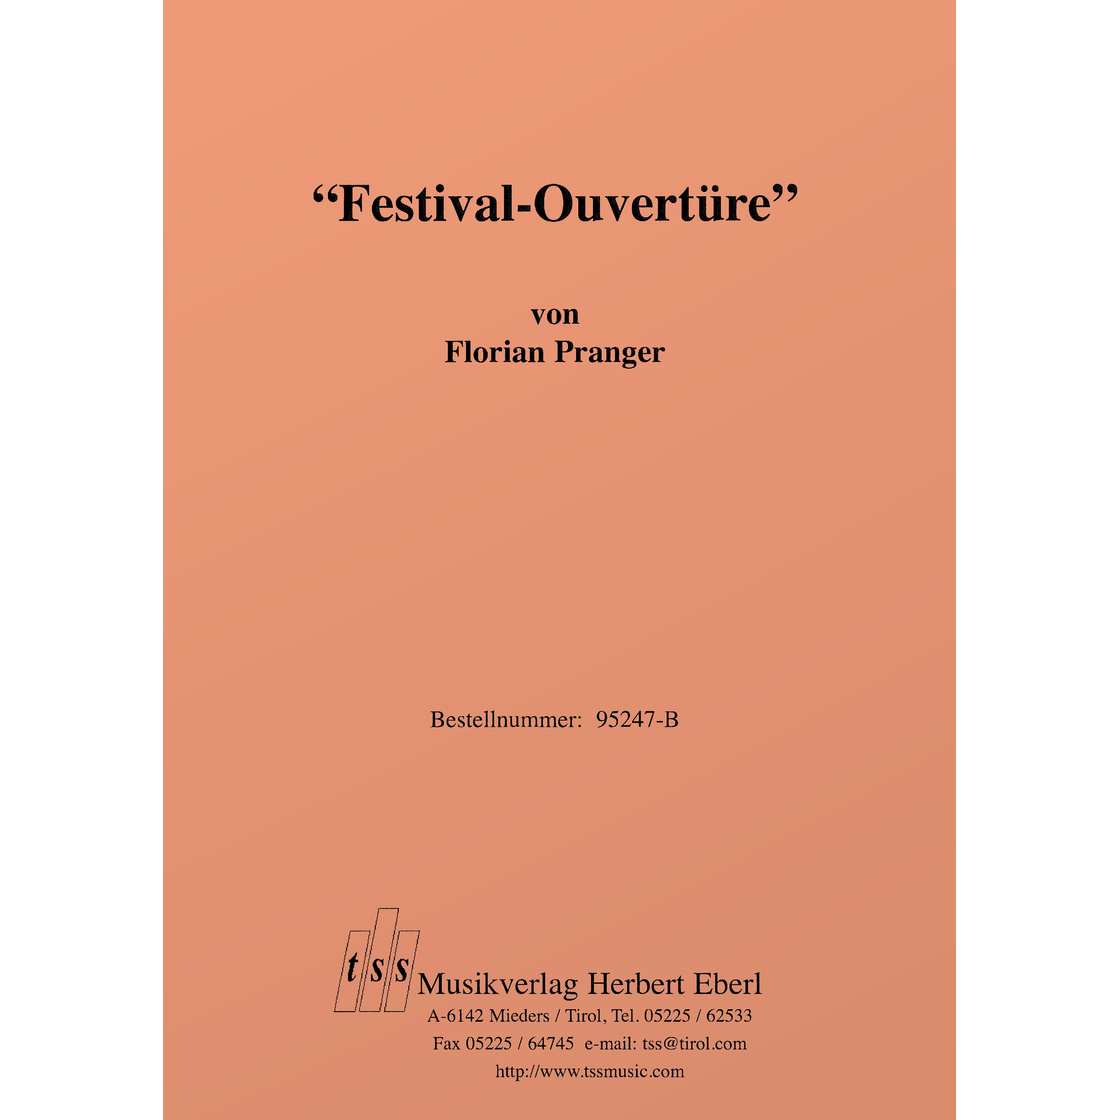 Festival-Ouvertre - click here